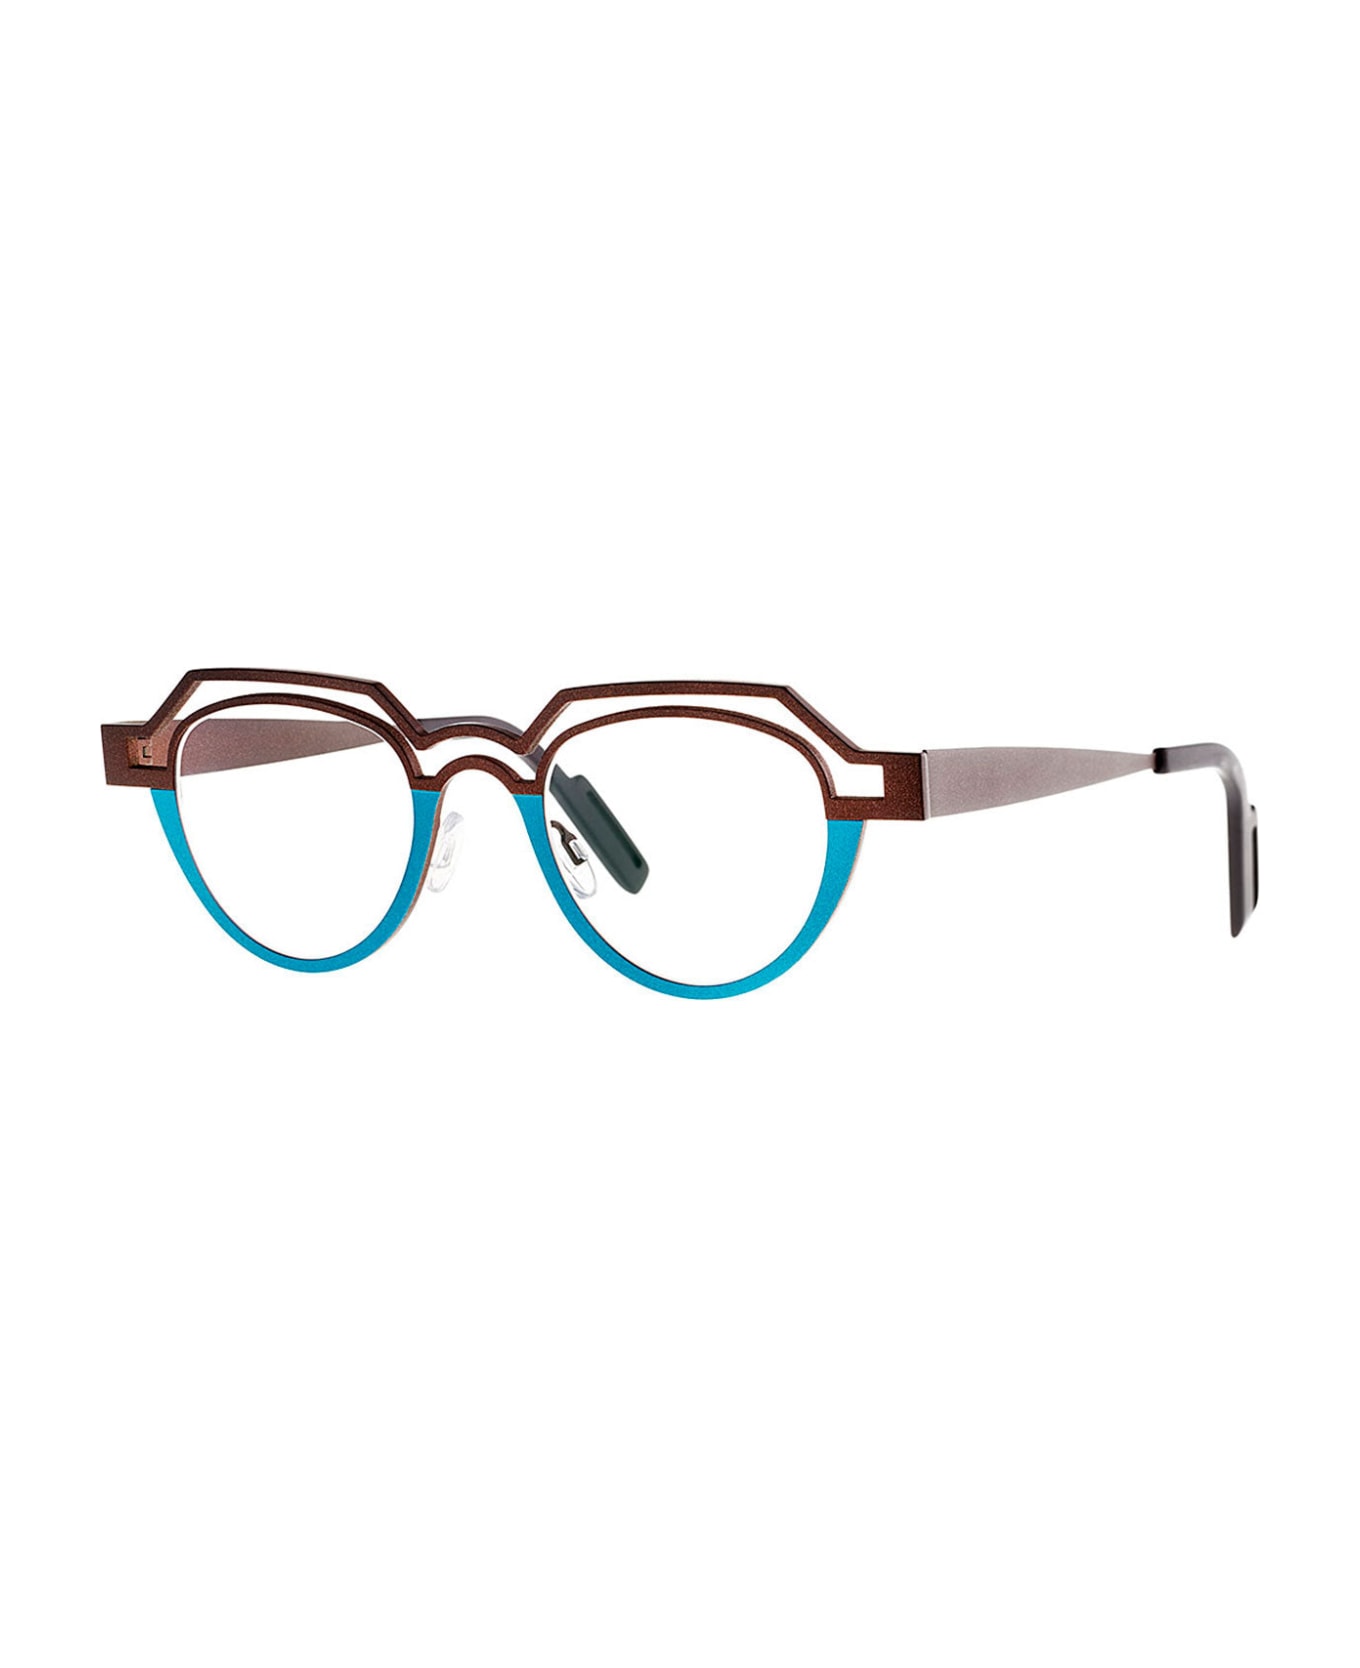 Theo Eyewear Perce 231 Glasses - brown/blue アイウェア